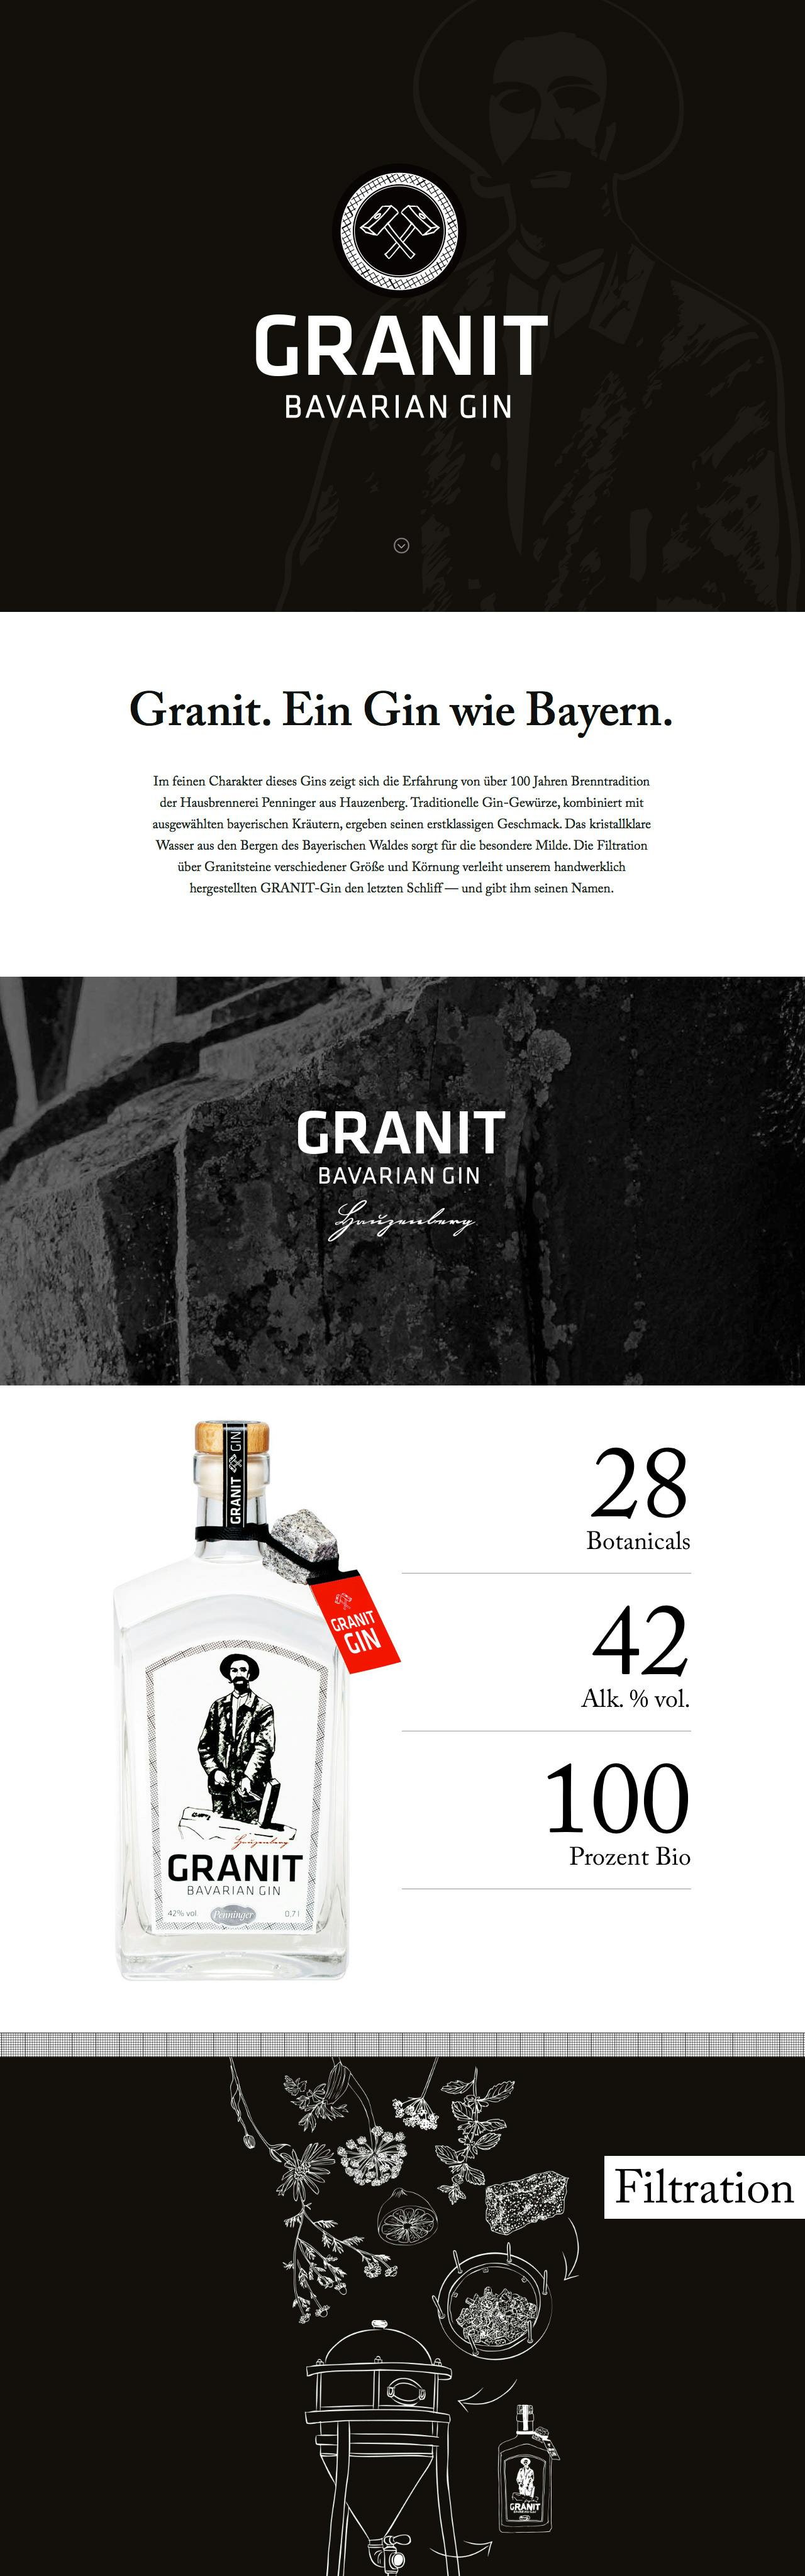 Granit Bavarian Gin Website Screenshot